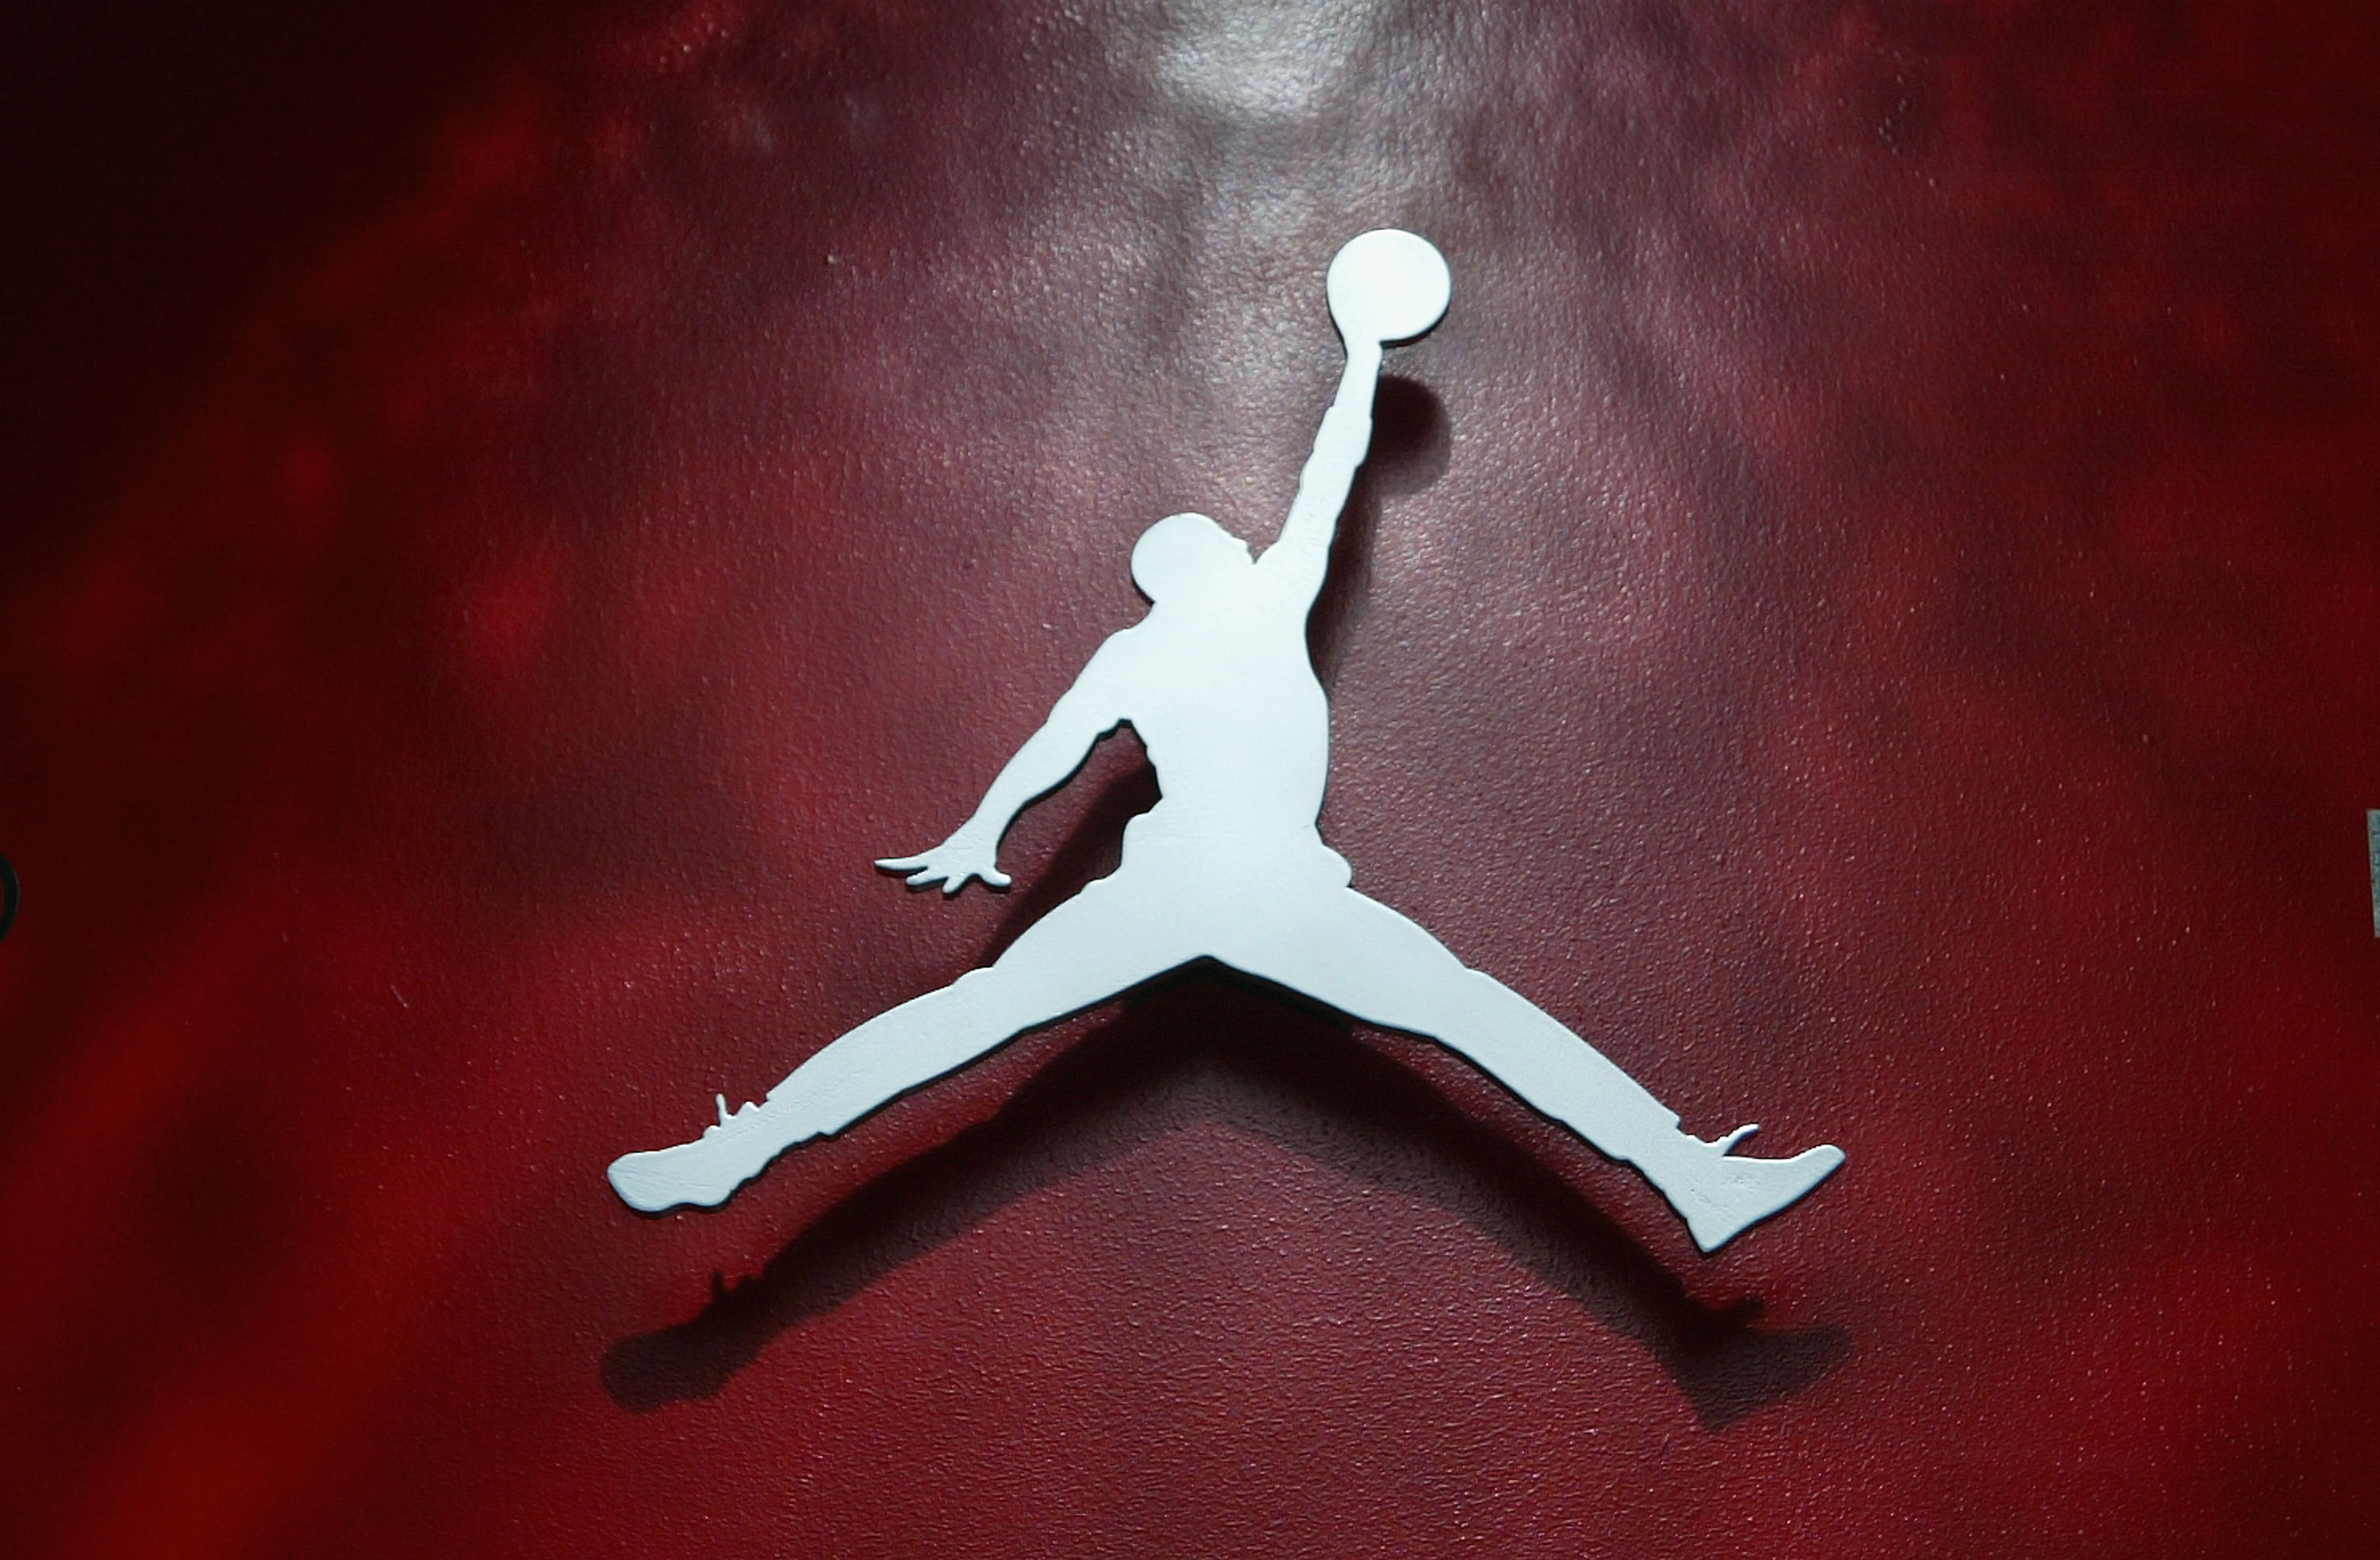 Air Jordan 1 “Satin Bred” Gets A Rumored Release Date